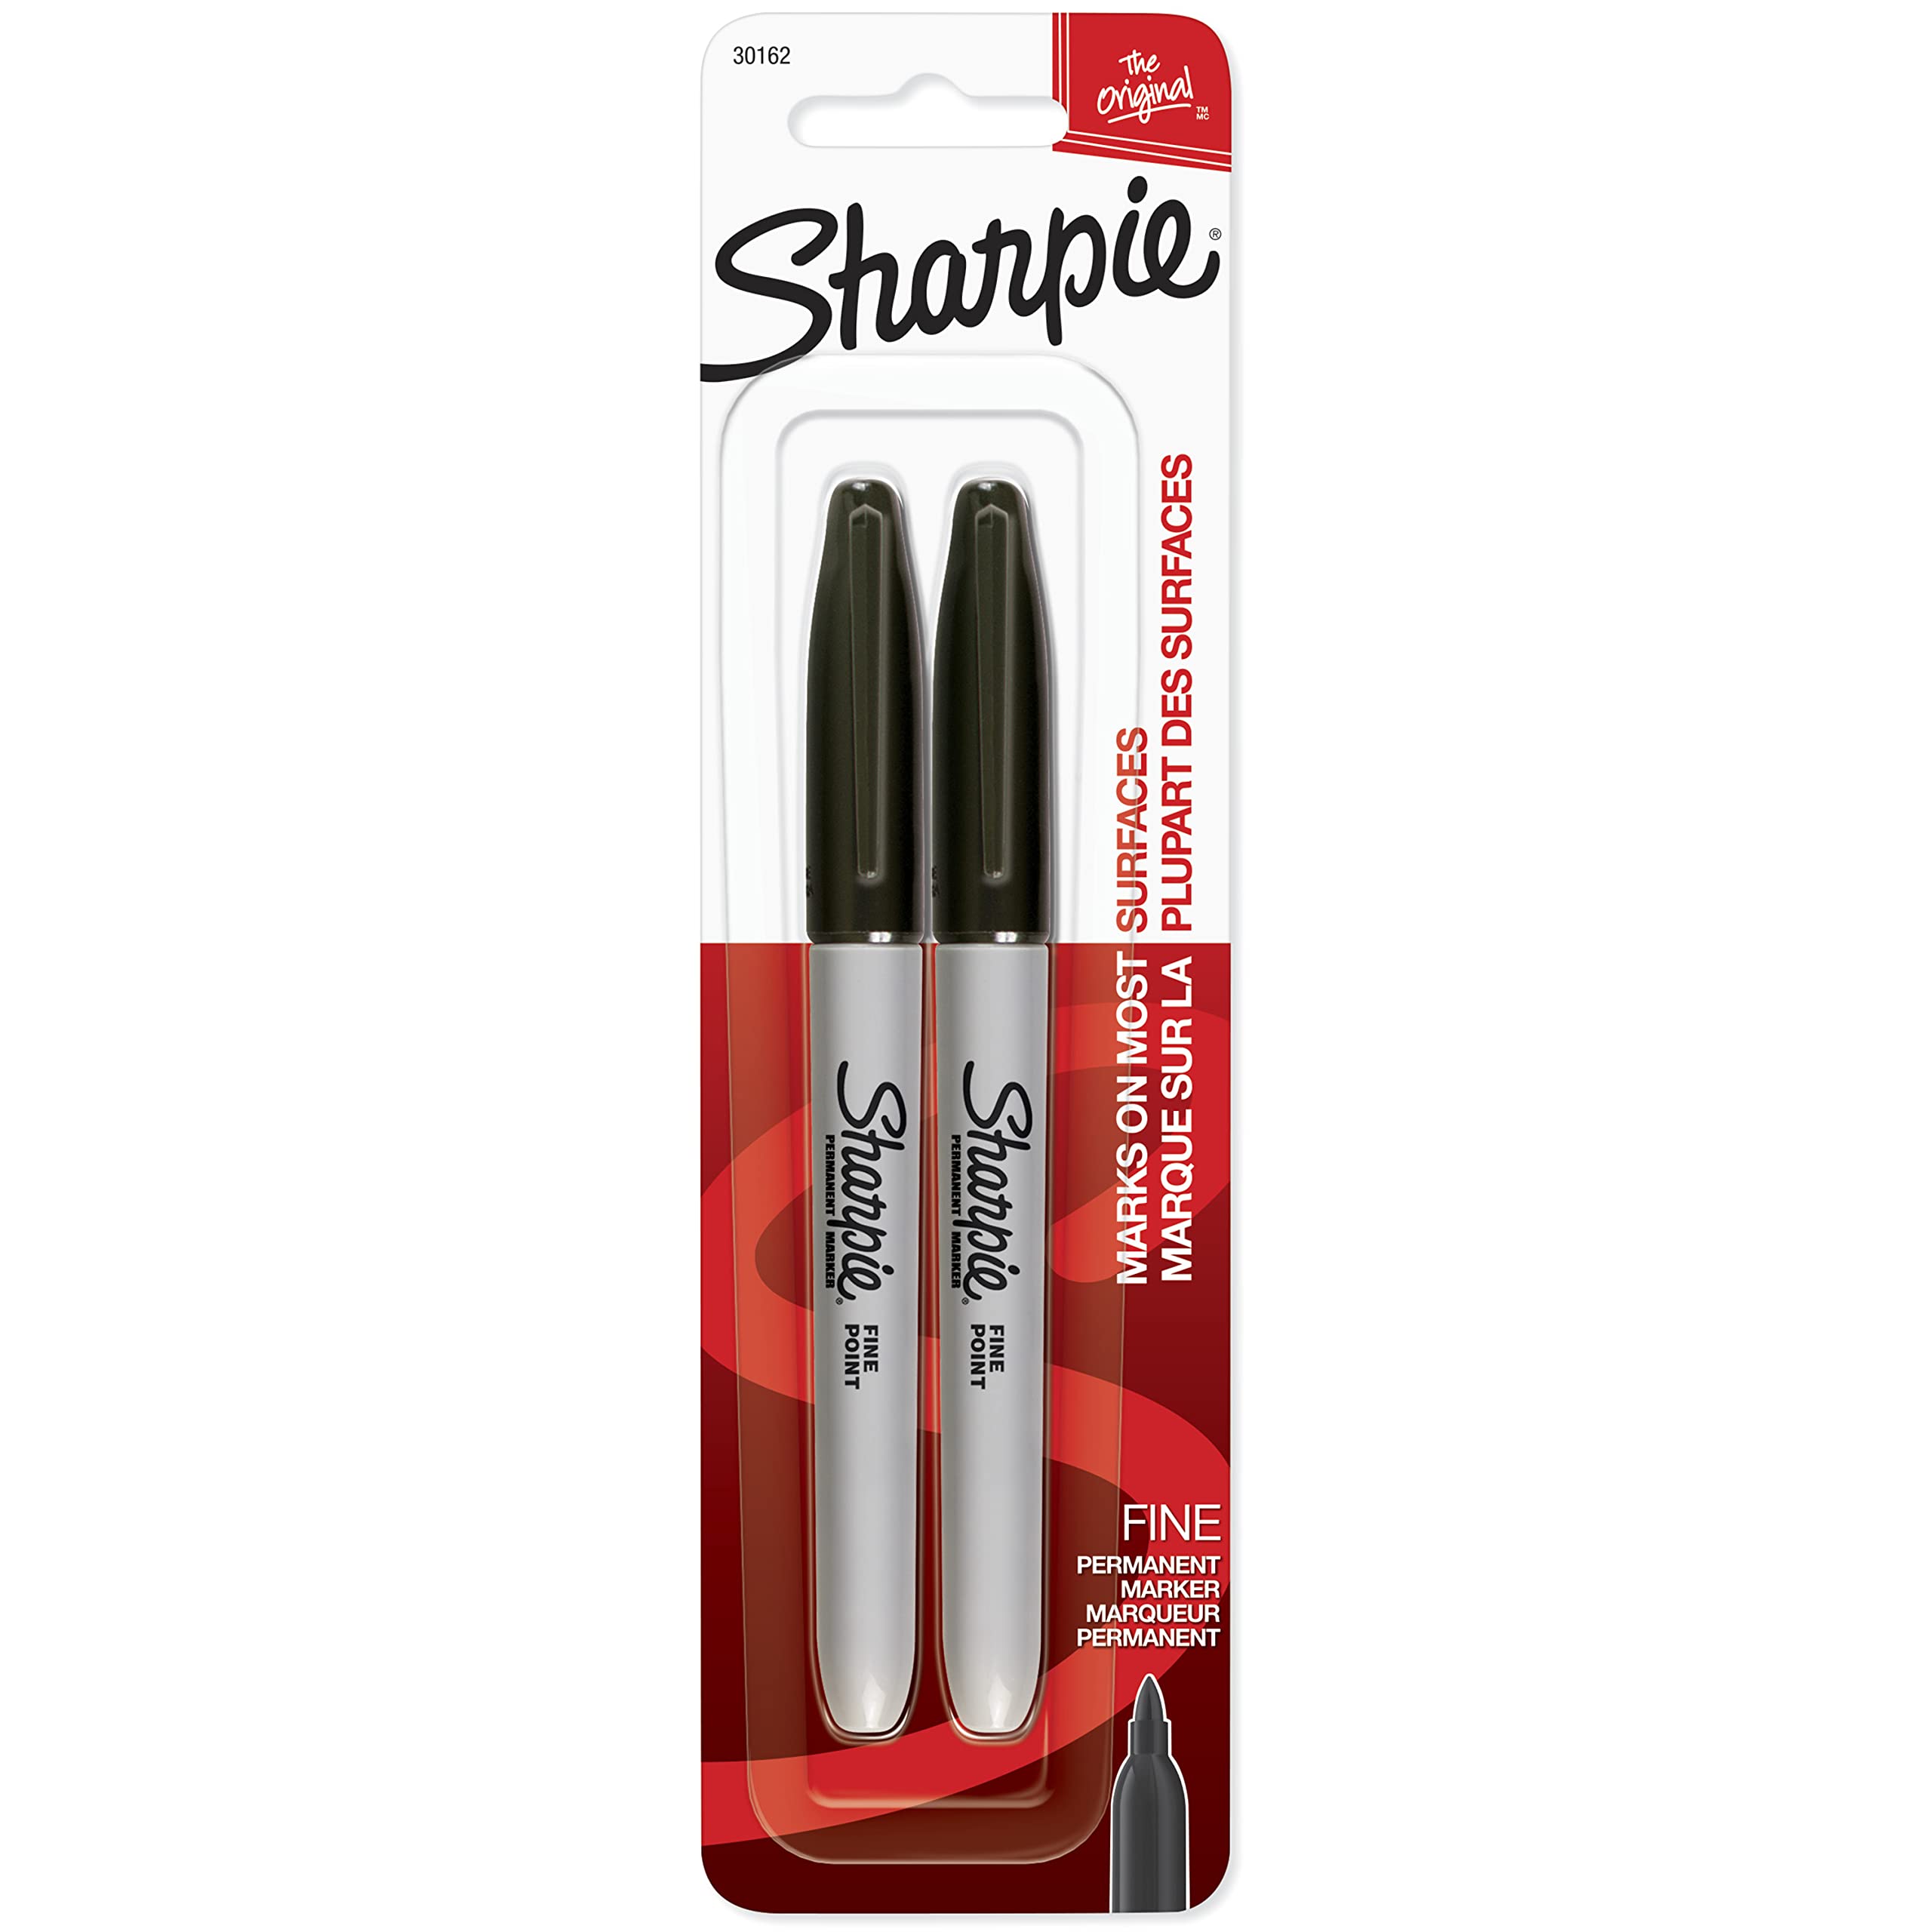 Sharpie 30162PP Permanent Markers, Fine Point, Black, 2 Count